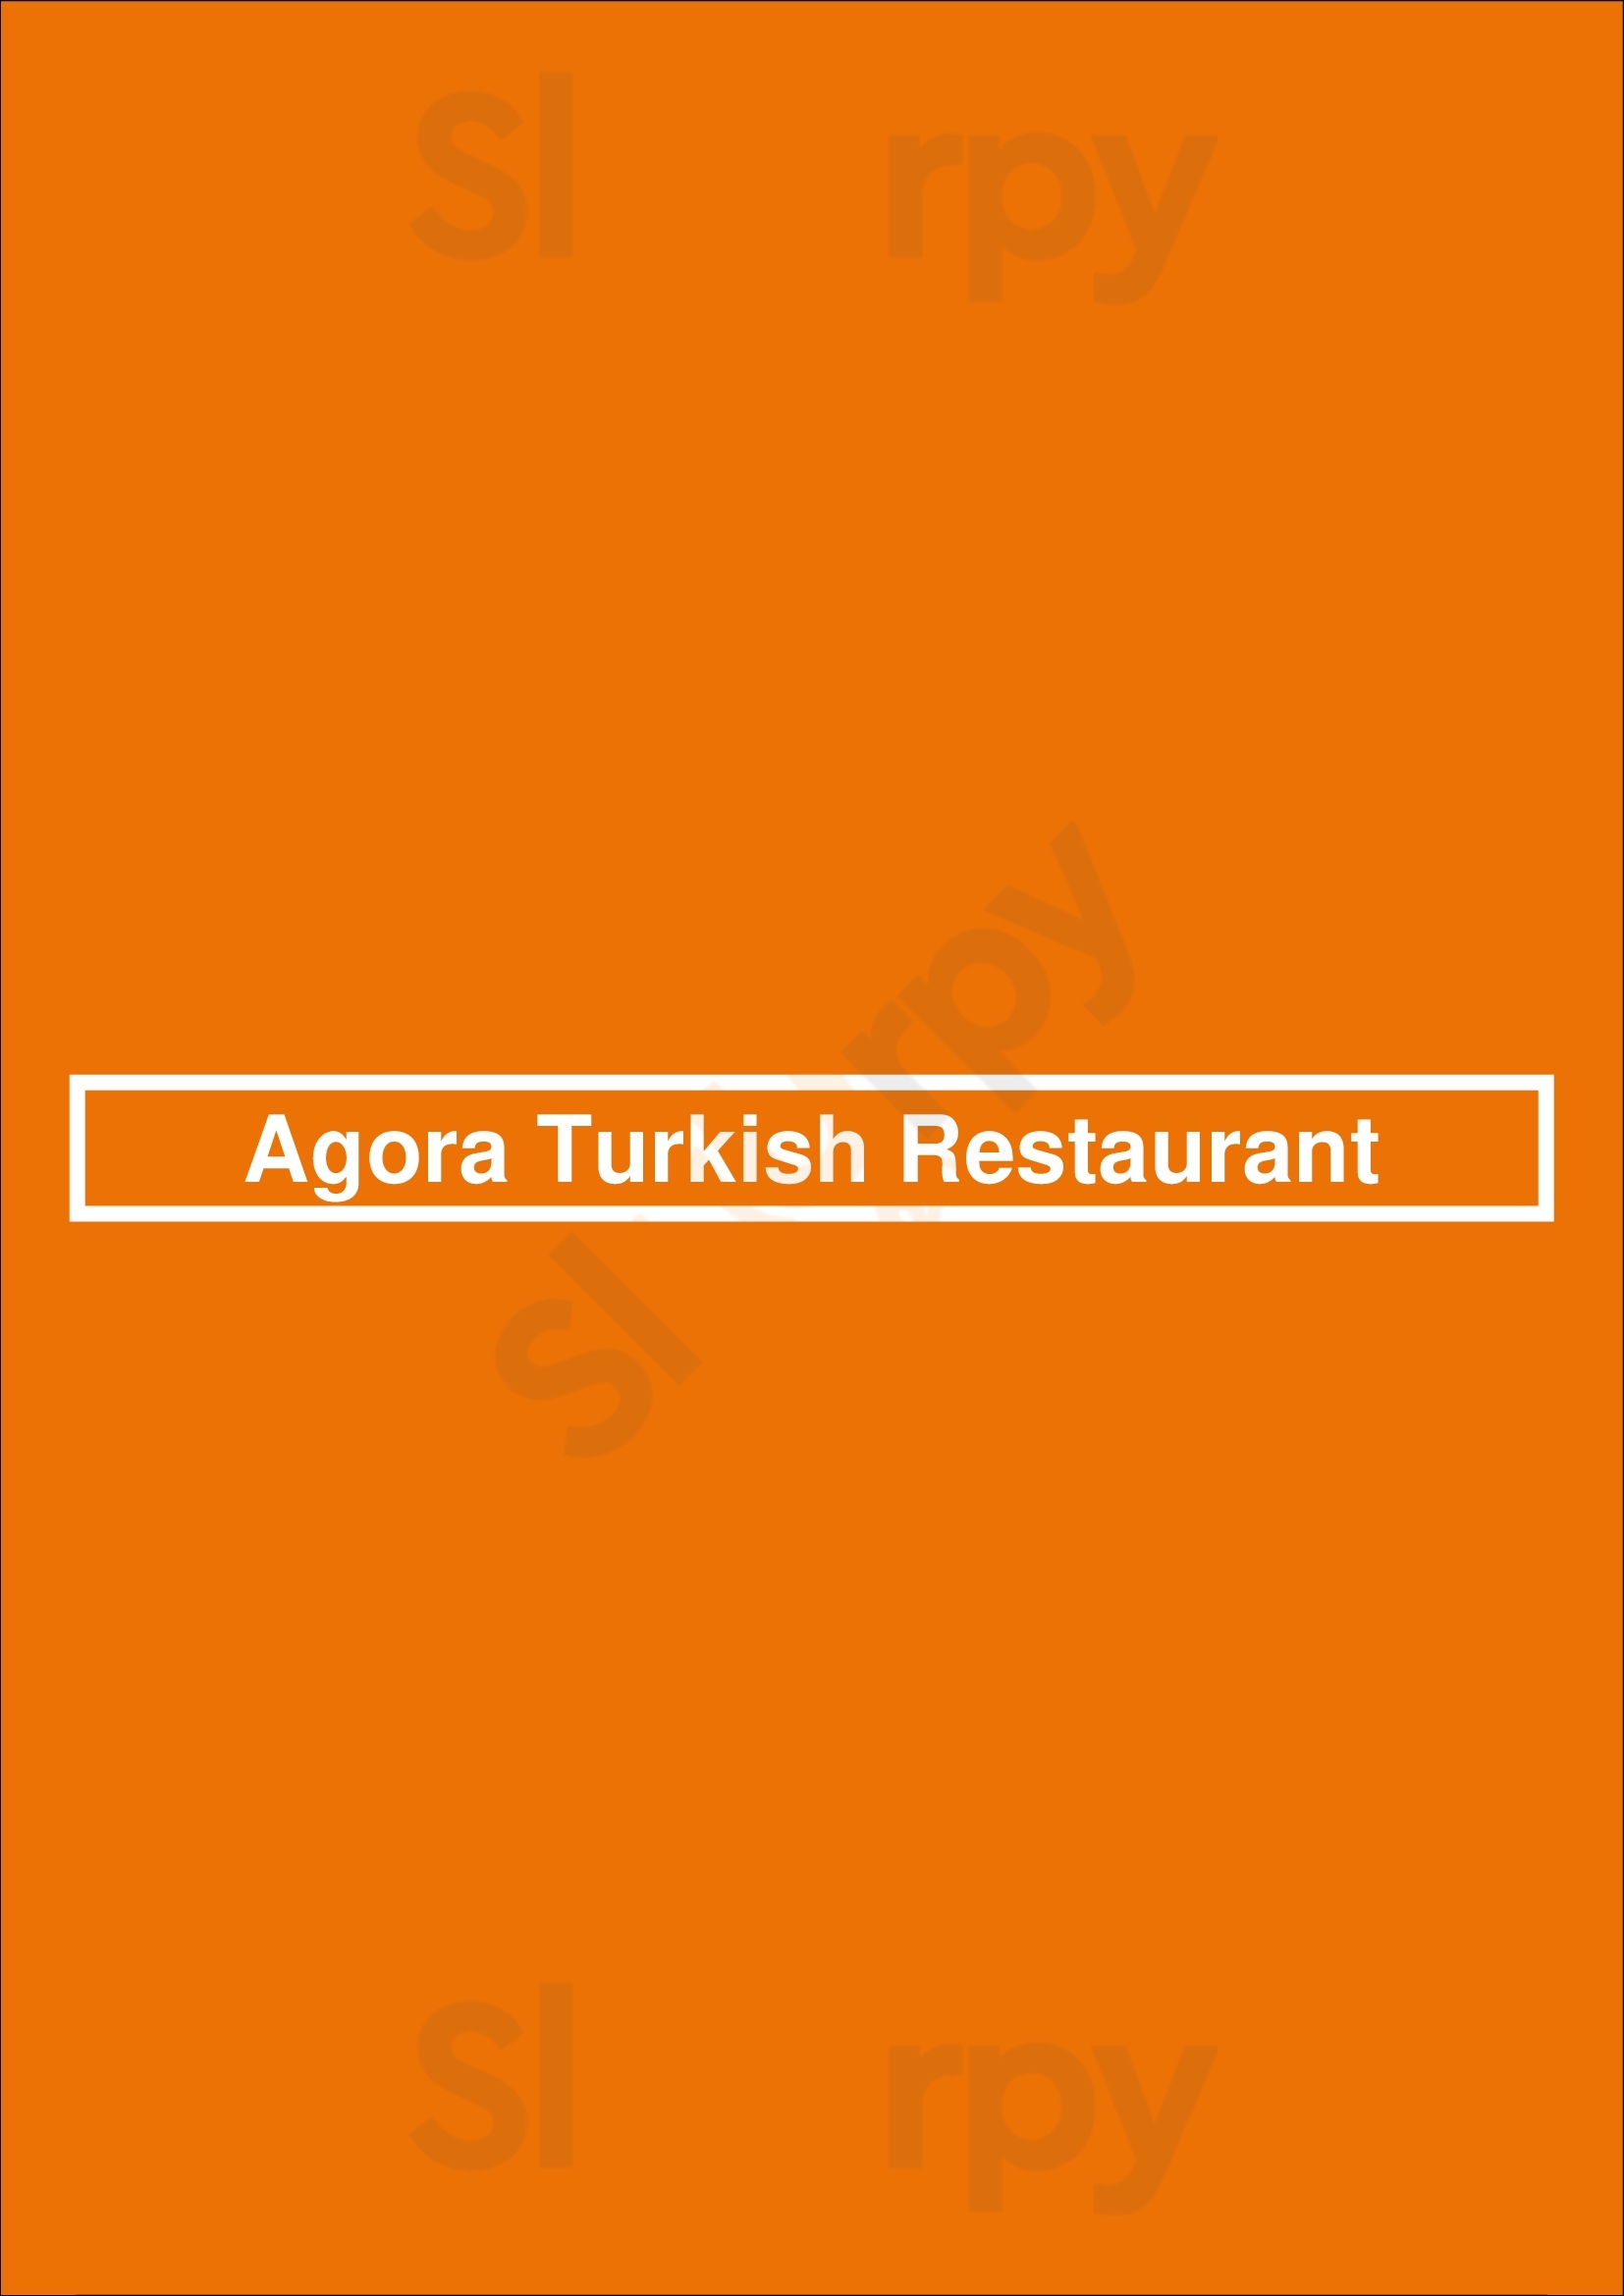 Agora Turkish Restaurant New York City Menu - 1